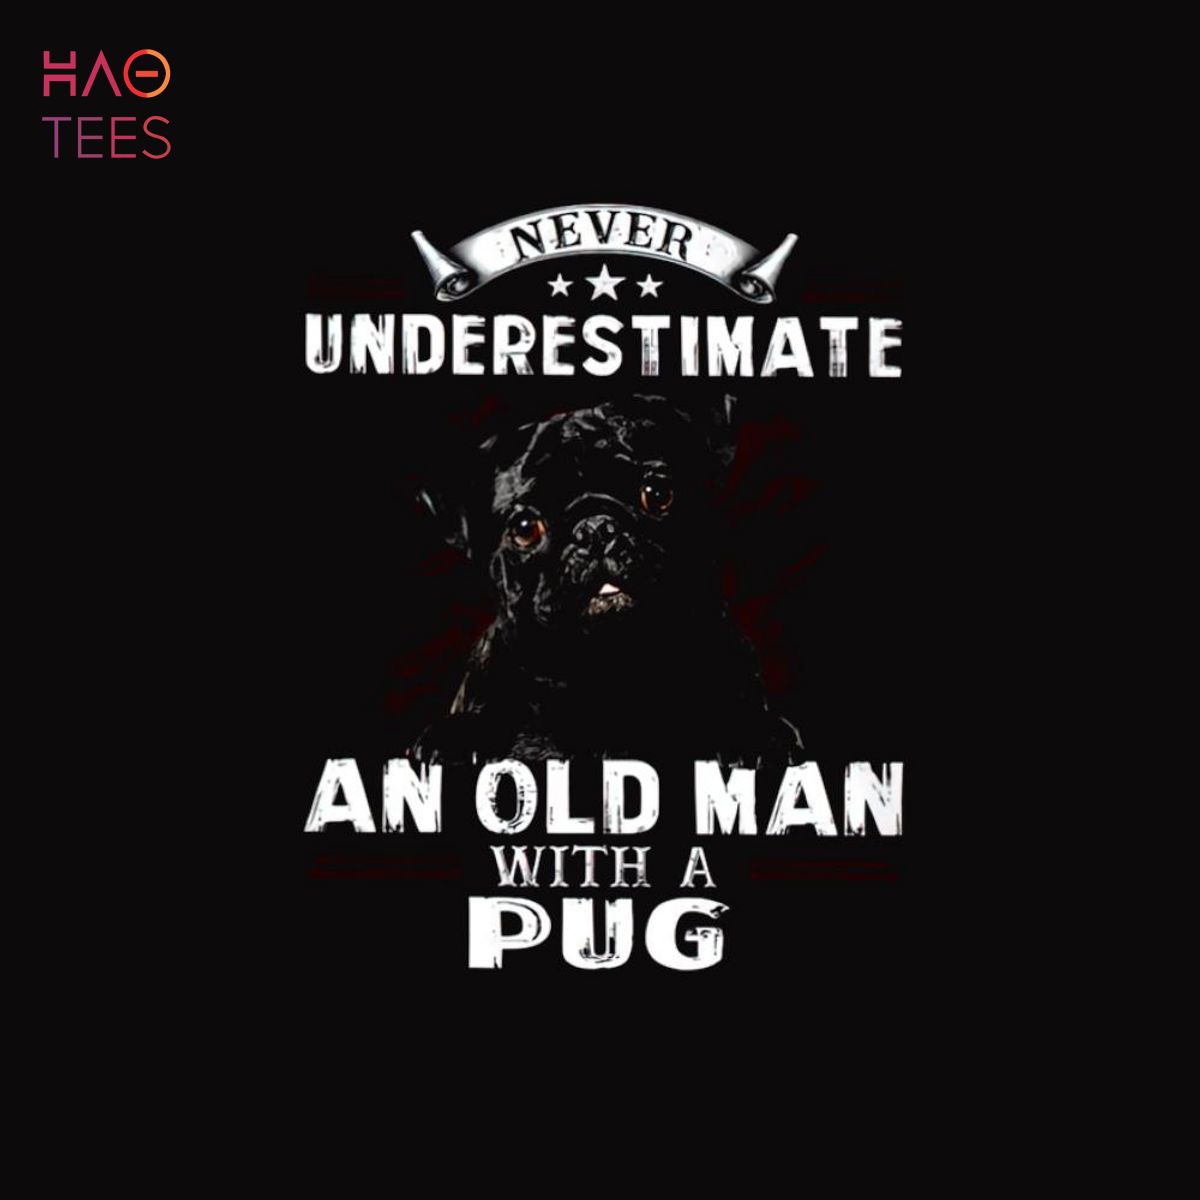 Old Man - BLACK Pug Shirt